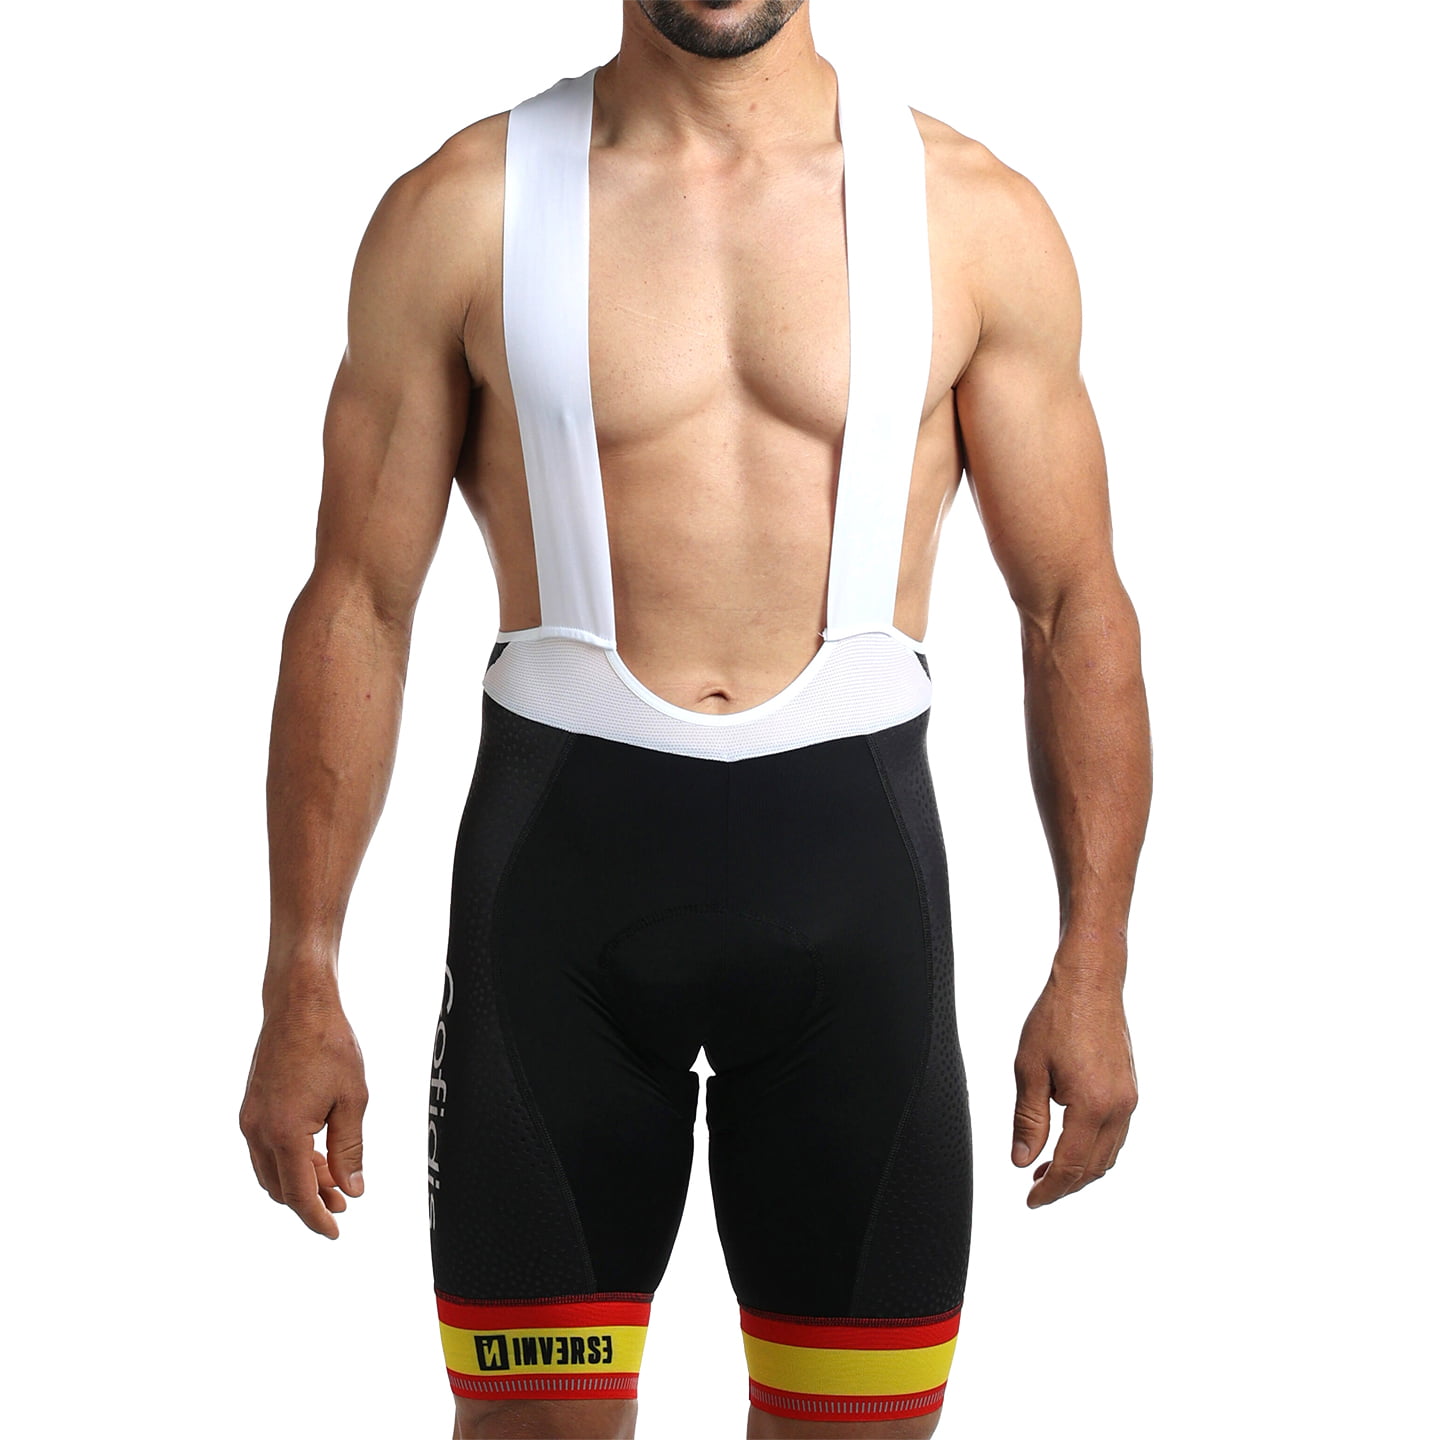 SPANISH NATIONAL TEAM 2024 Bib Shorts, for men, size M, Cycle shorts, Cycling clothing